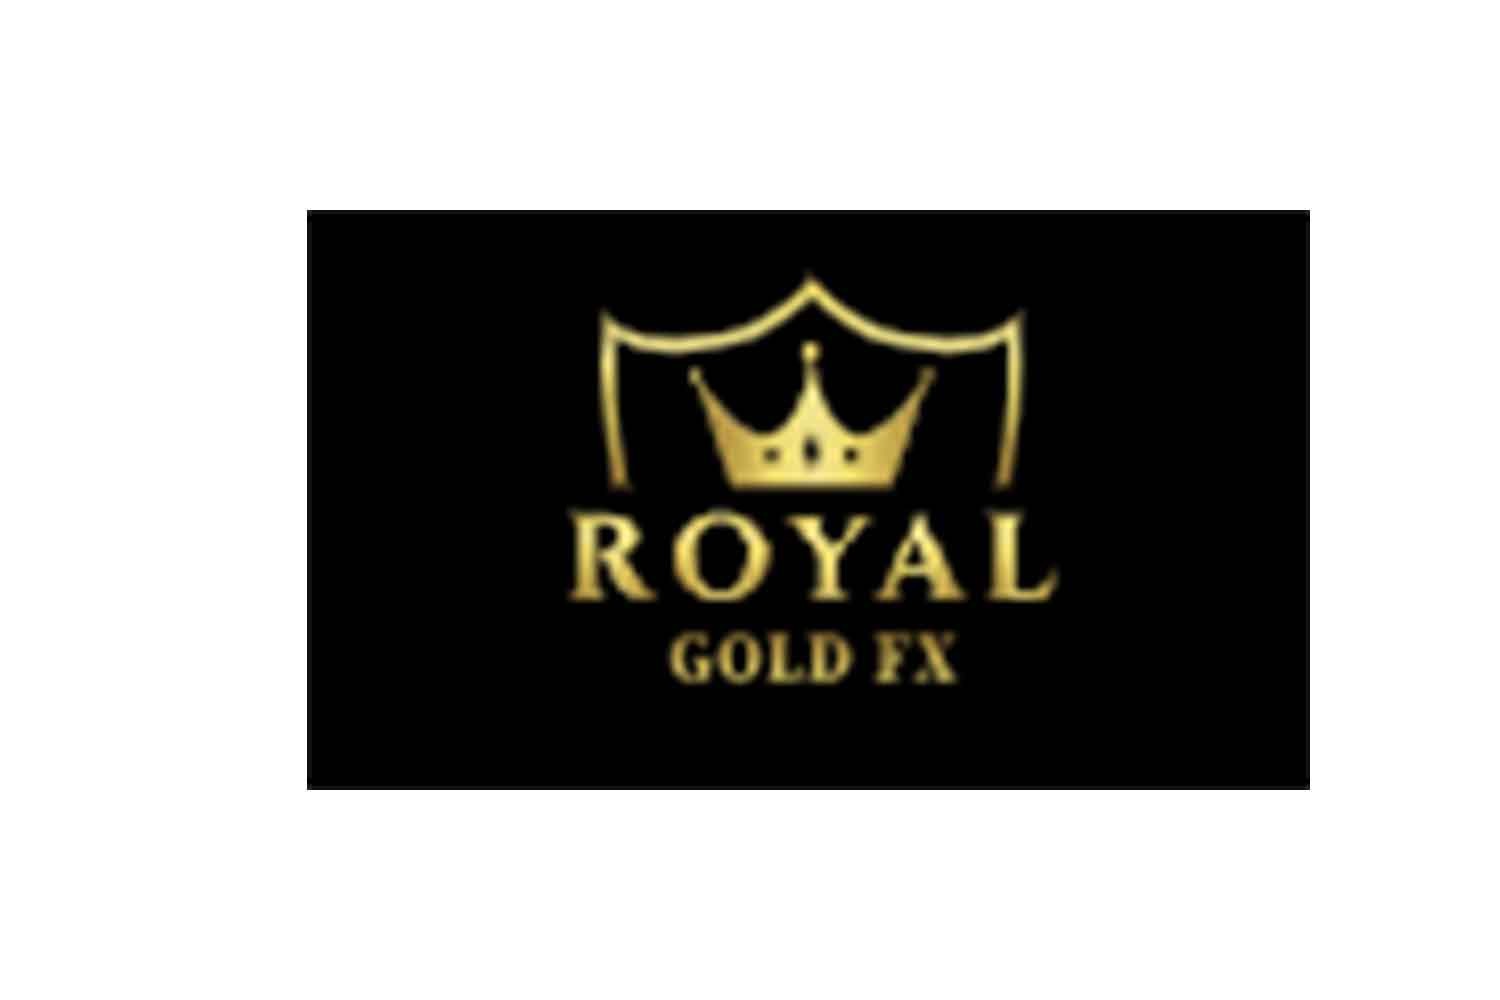 Royal golden